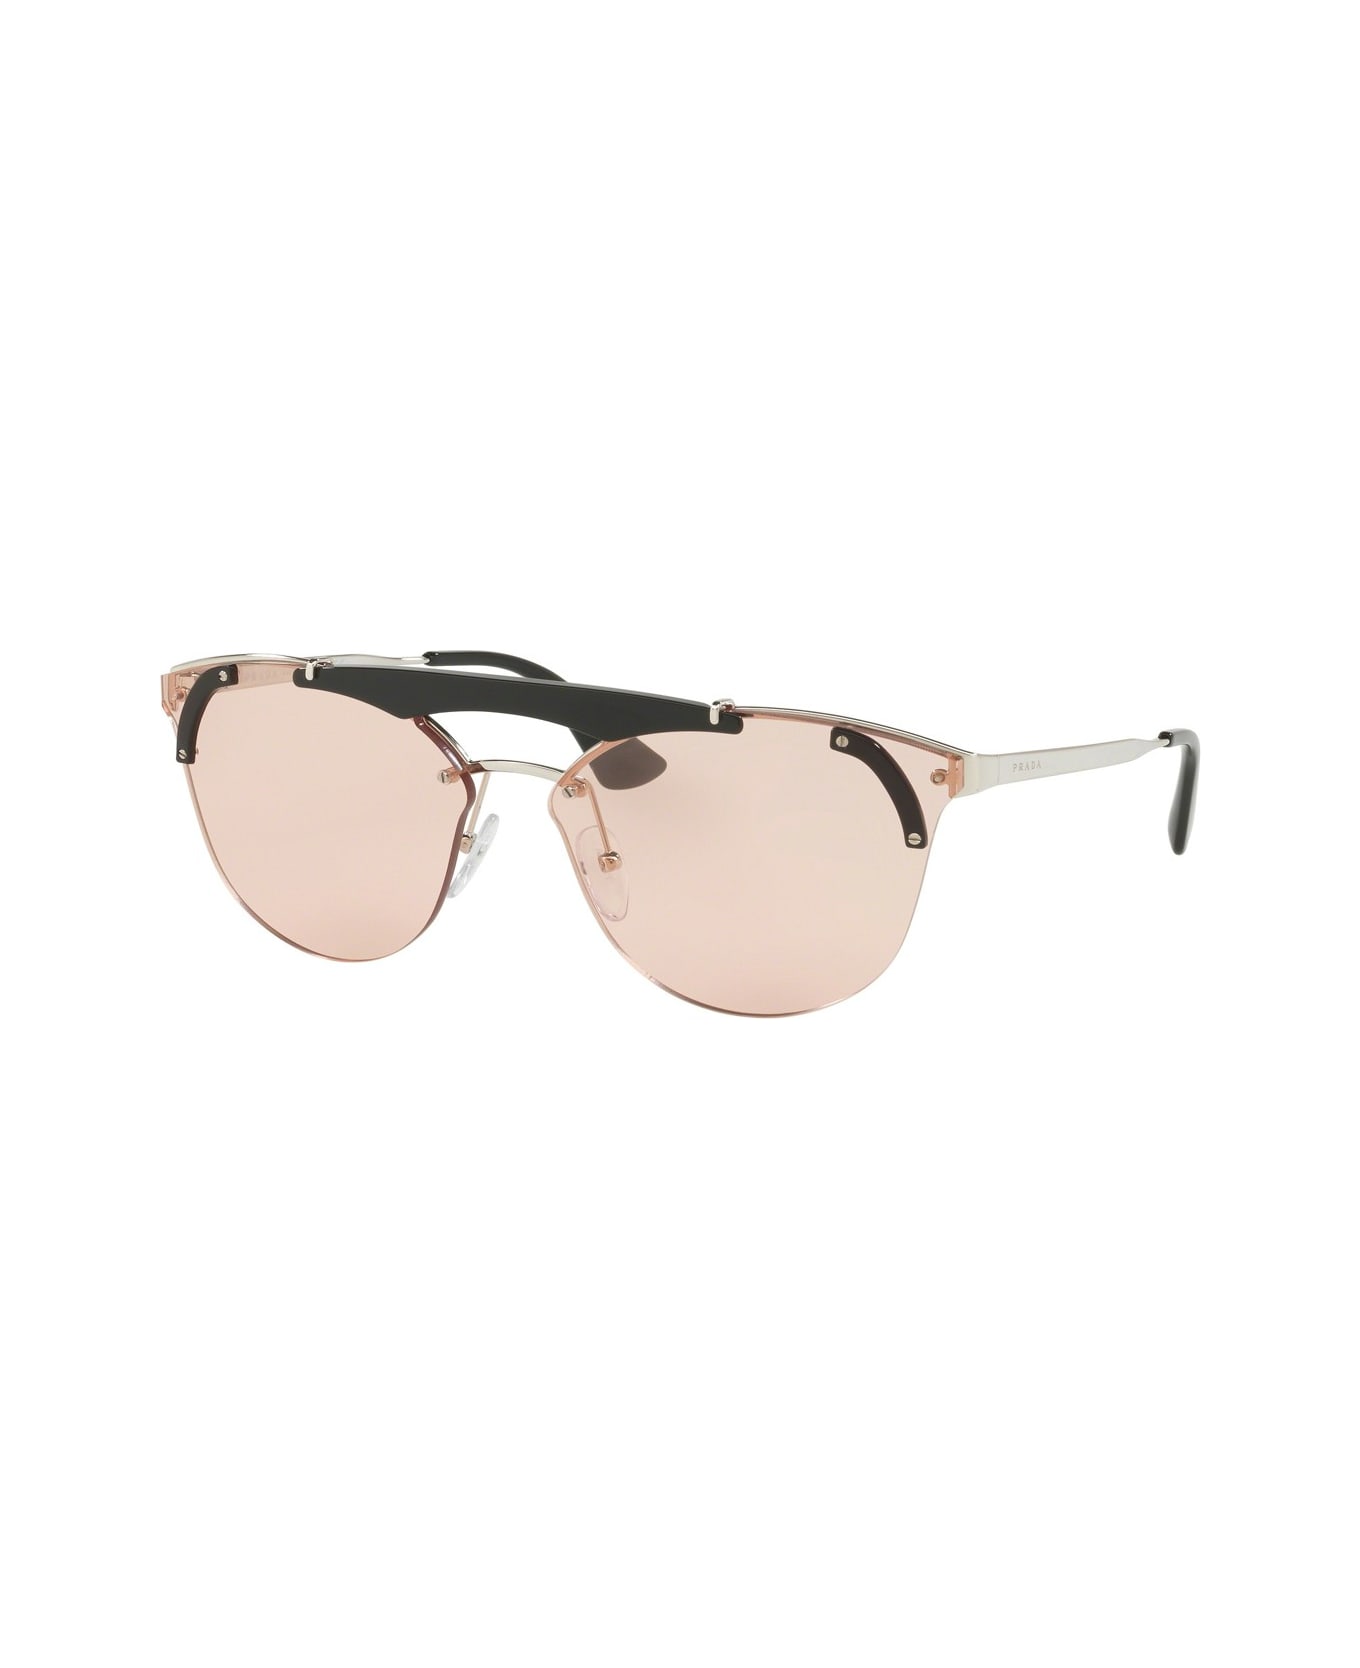 Prada Eyewear Pr 53us Sunglasses - Argento